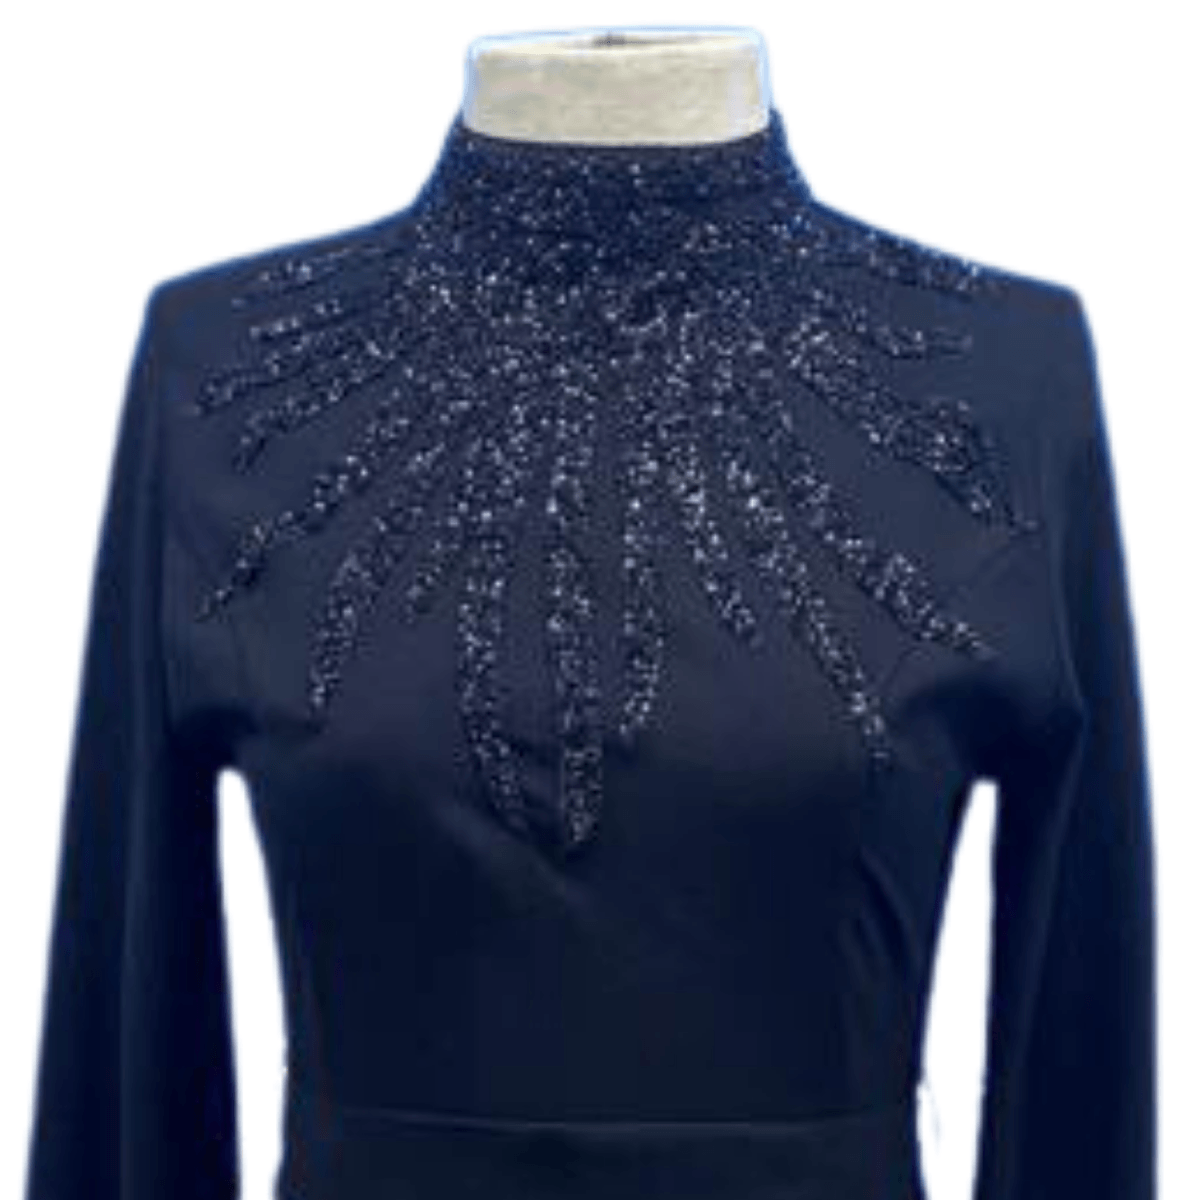 Black Jewel Dress - Divinity Collection